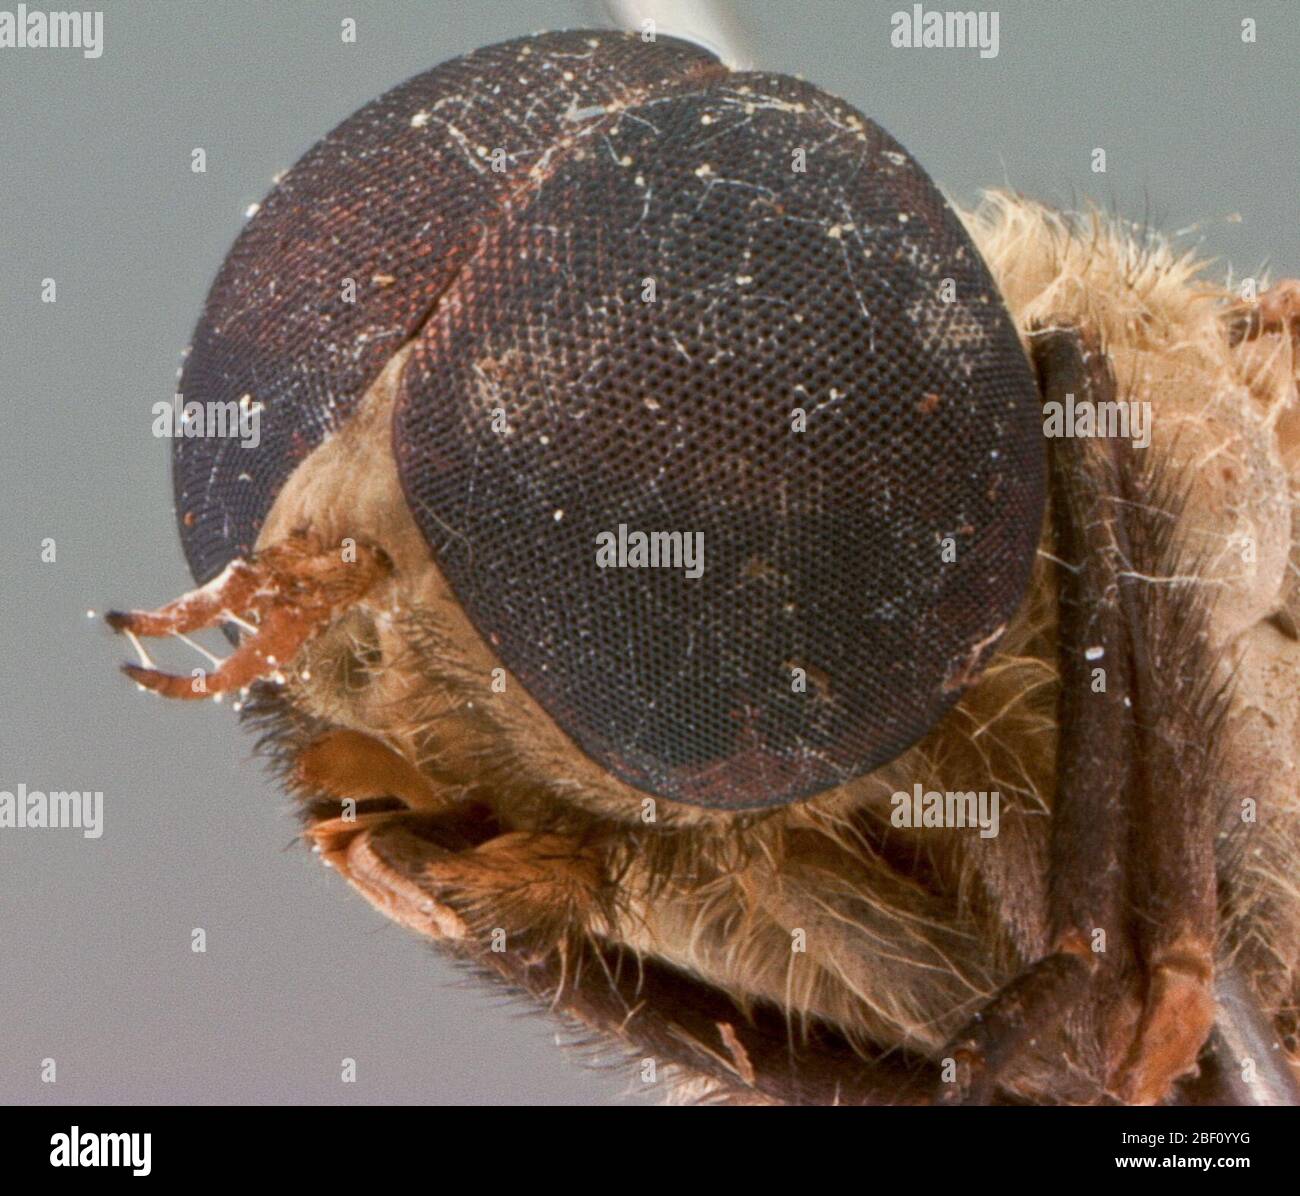 Cydistomyia Cydistomyia pilipennis. Ologype maschio. Lunghezza: 11.8 mm; larghezza: 11.5 mm. Foto Stock